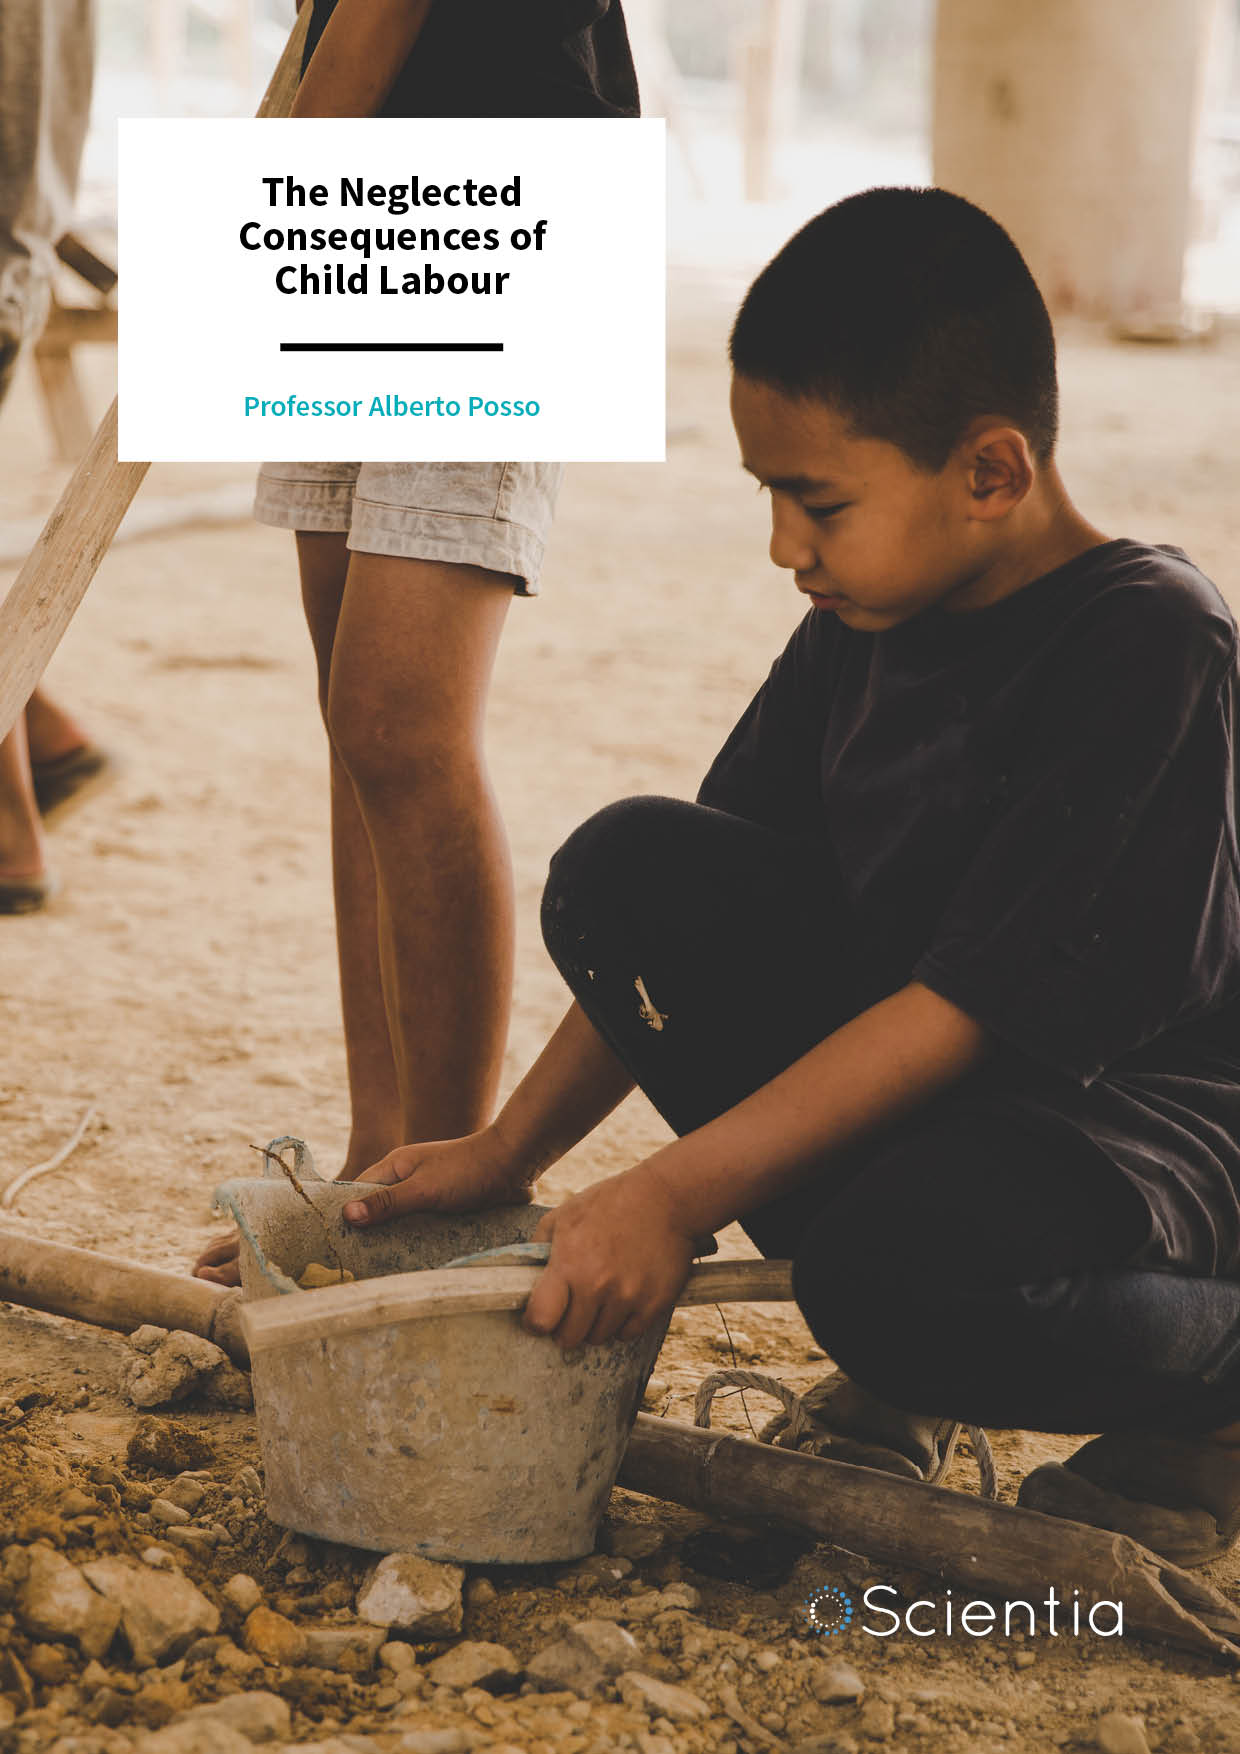 Professor Alberto Posso – The Neglected Consequences of Child Labour